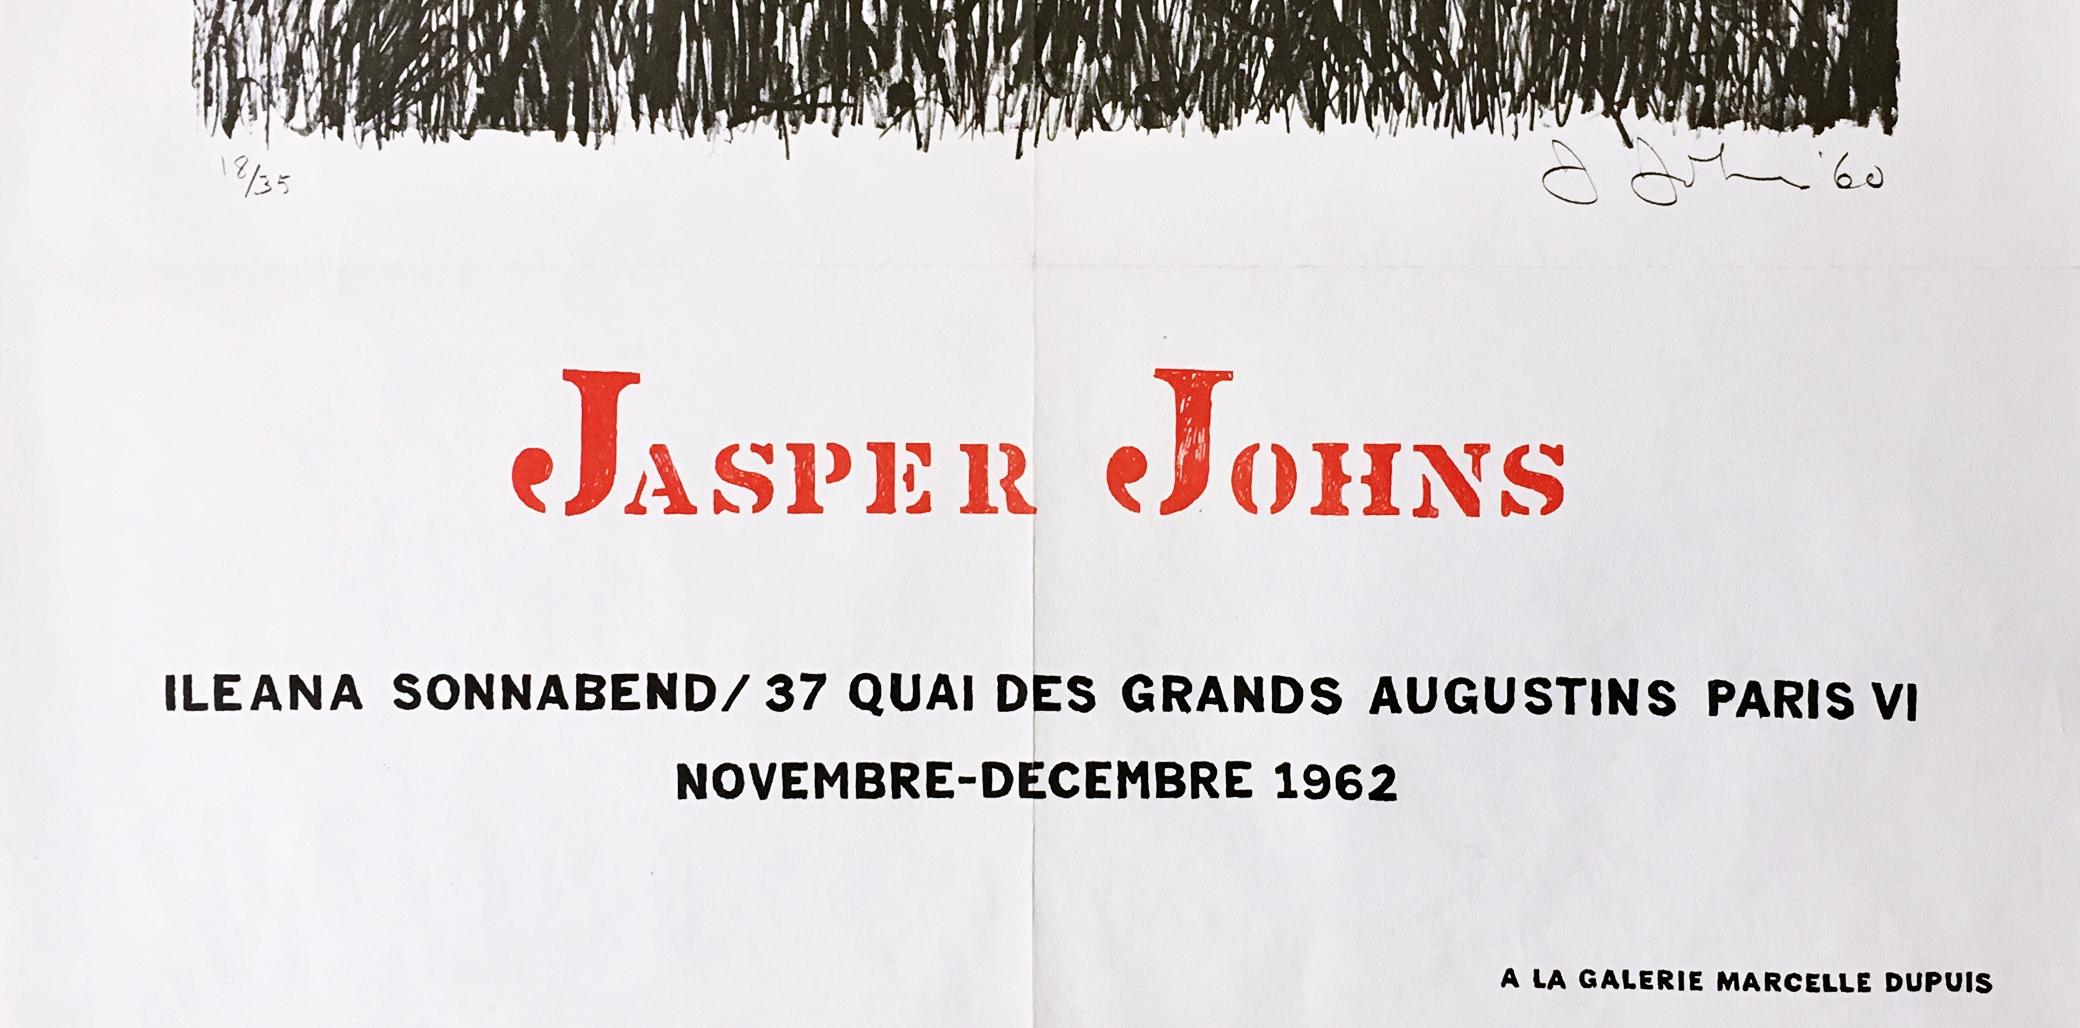 Jasper Johns at Ileana Sonnabend (rare early mid century modern European poster) For Sale 5